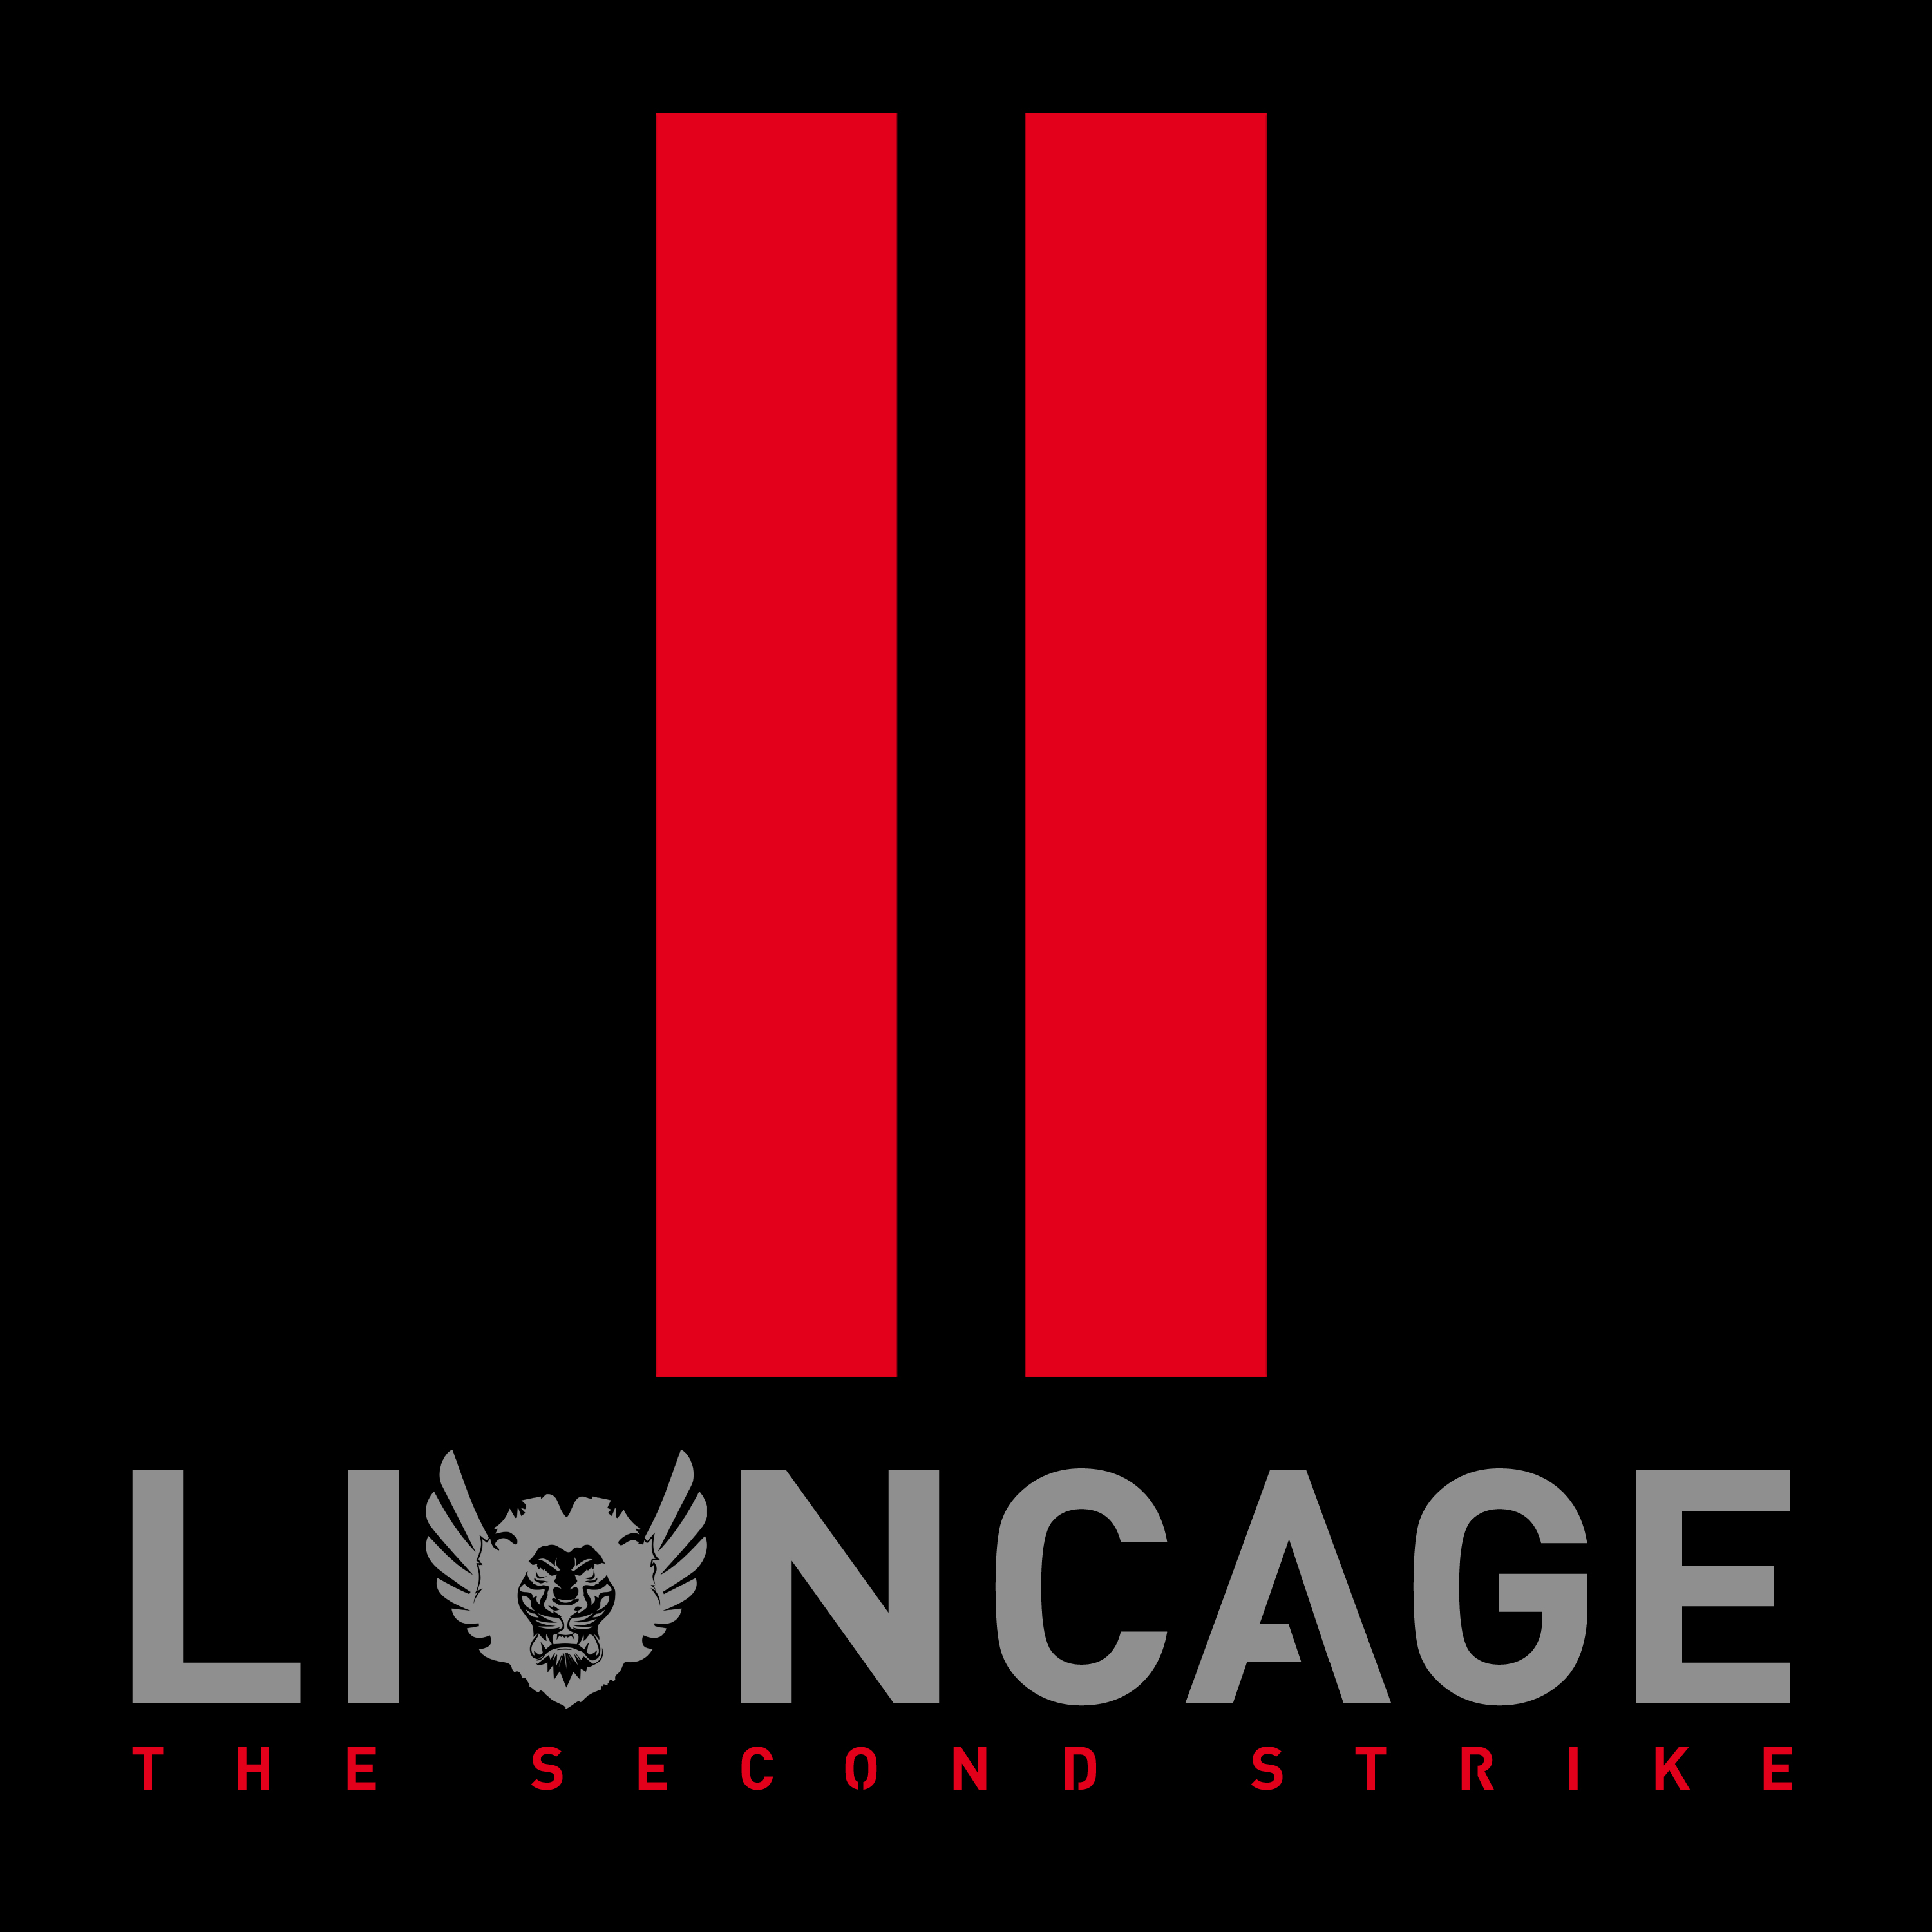 Lioncage – The Second Strike